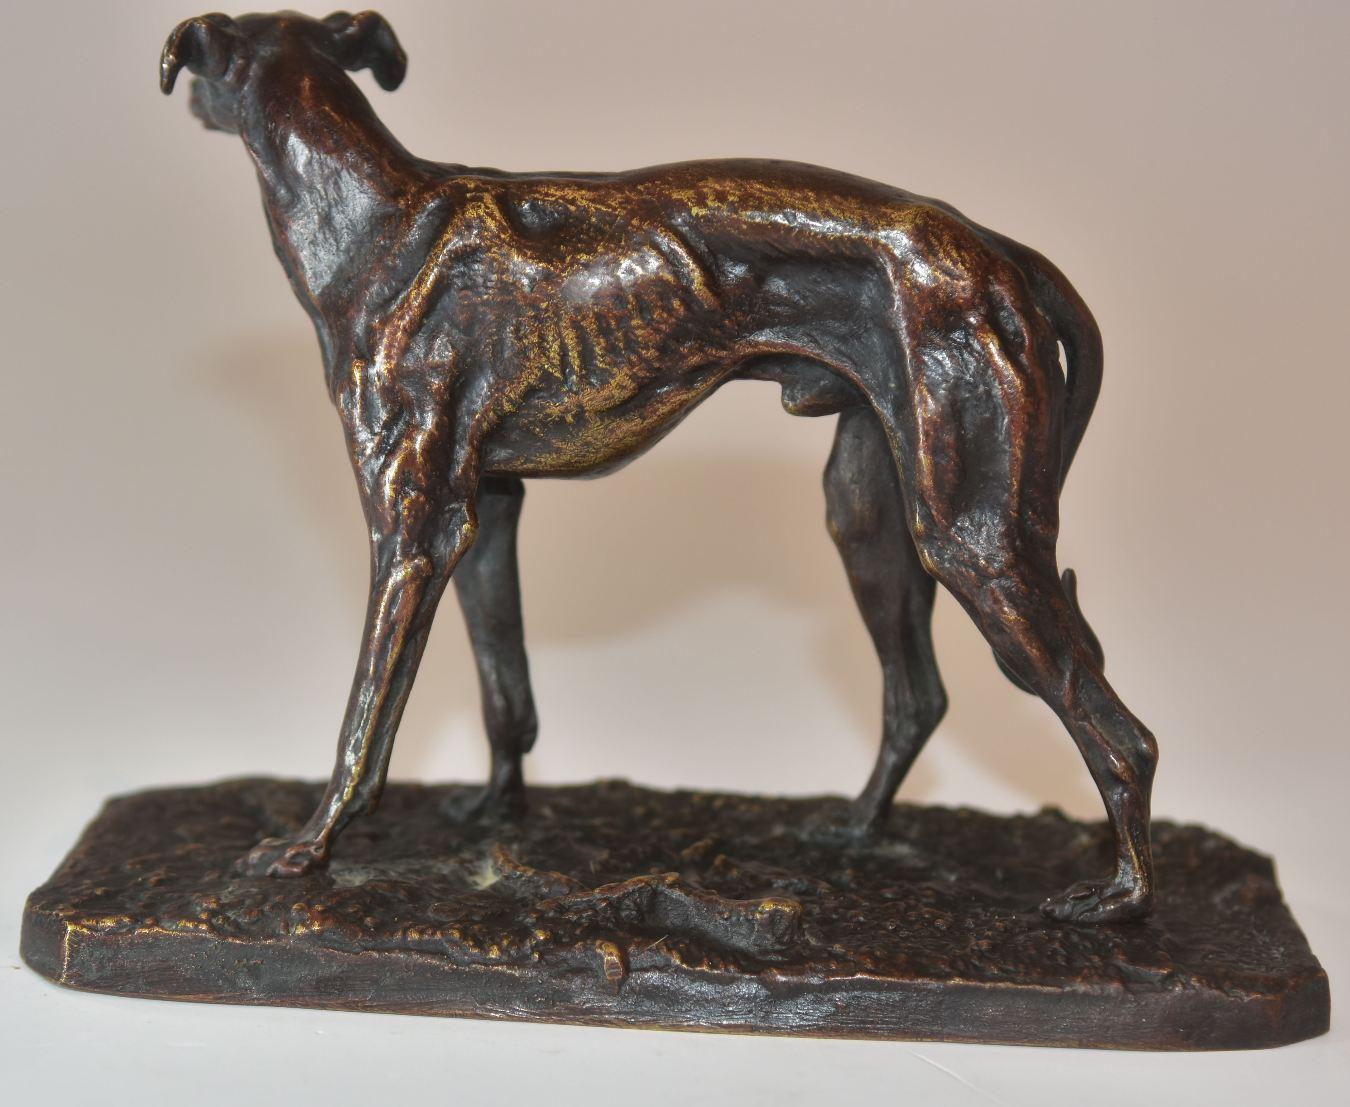 19th century greyhound hard bronze patina by Pierre-Jules Mêne (1810-1879) dimension: 13 cm high, 17.5 cm long and 7 cm deep.